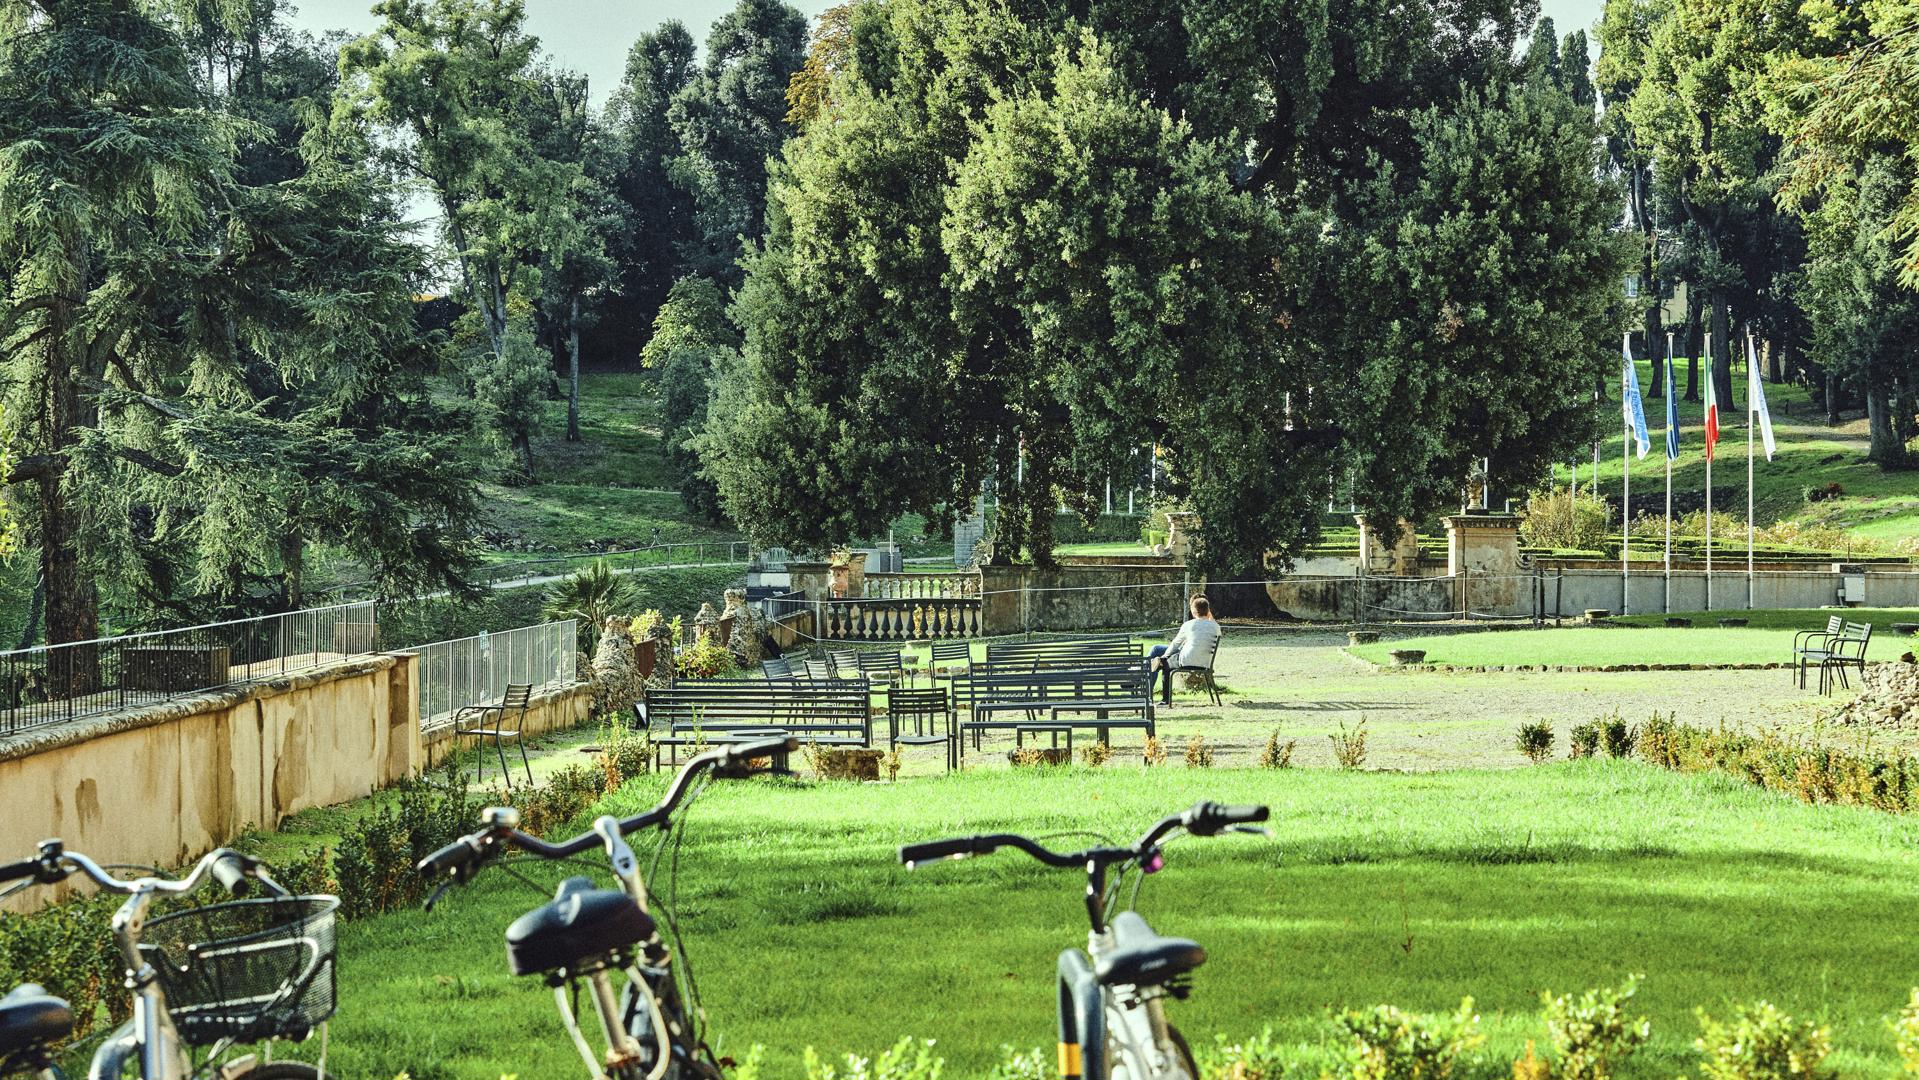 Villa Salviati garden with bikes